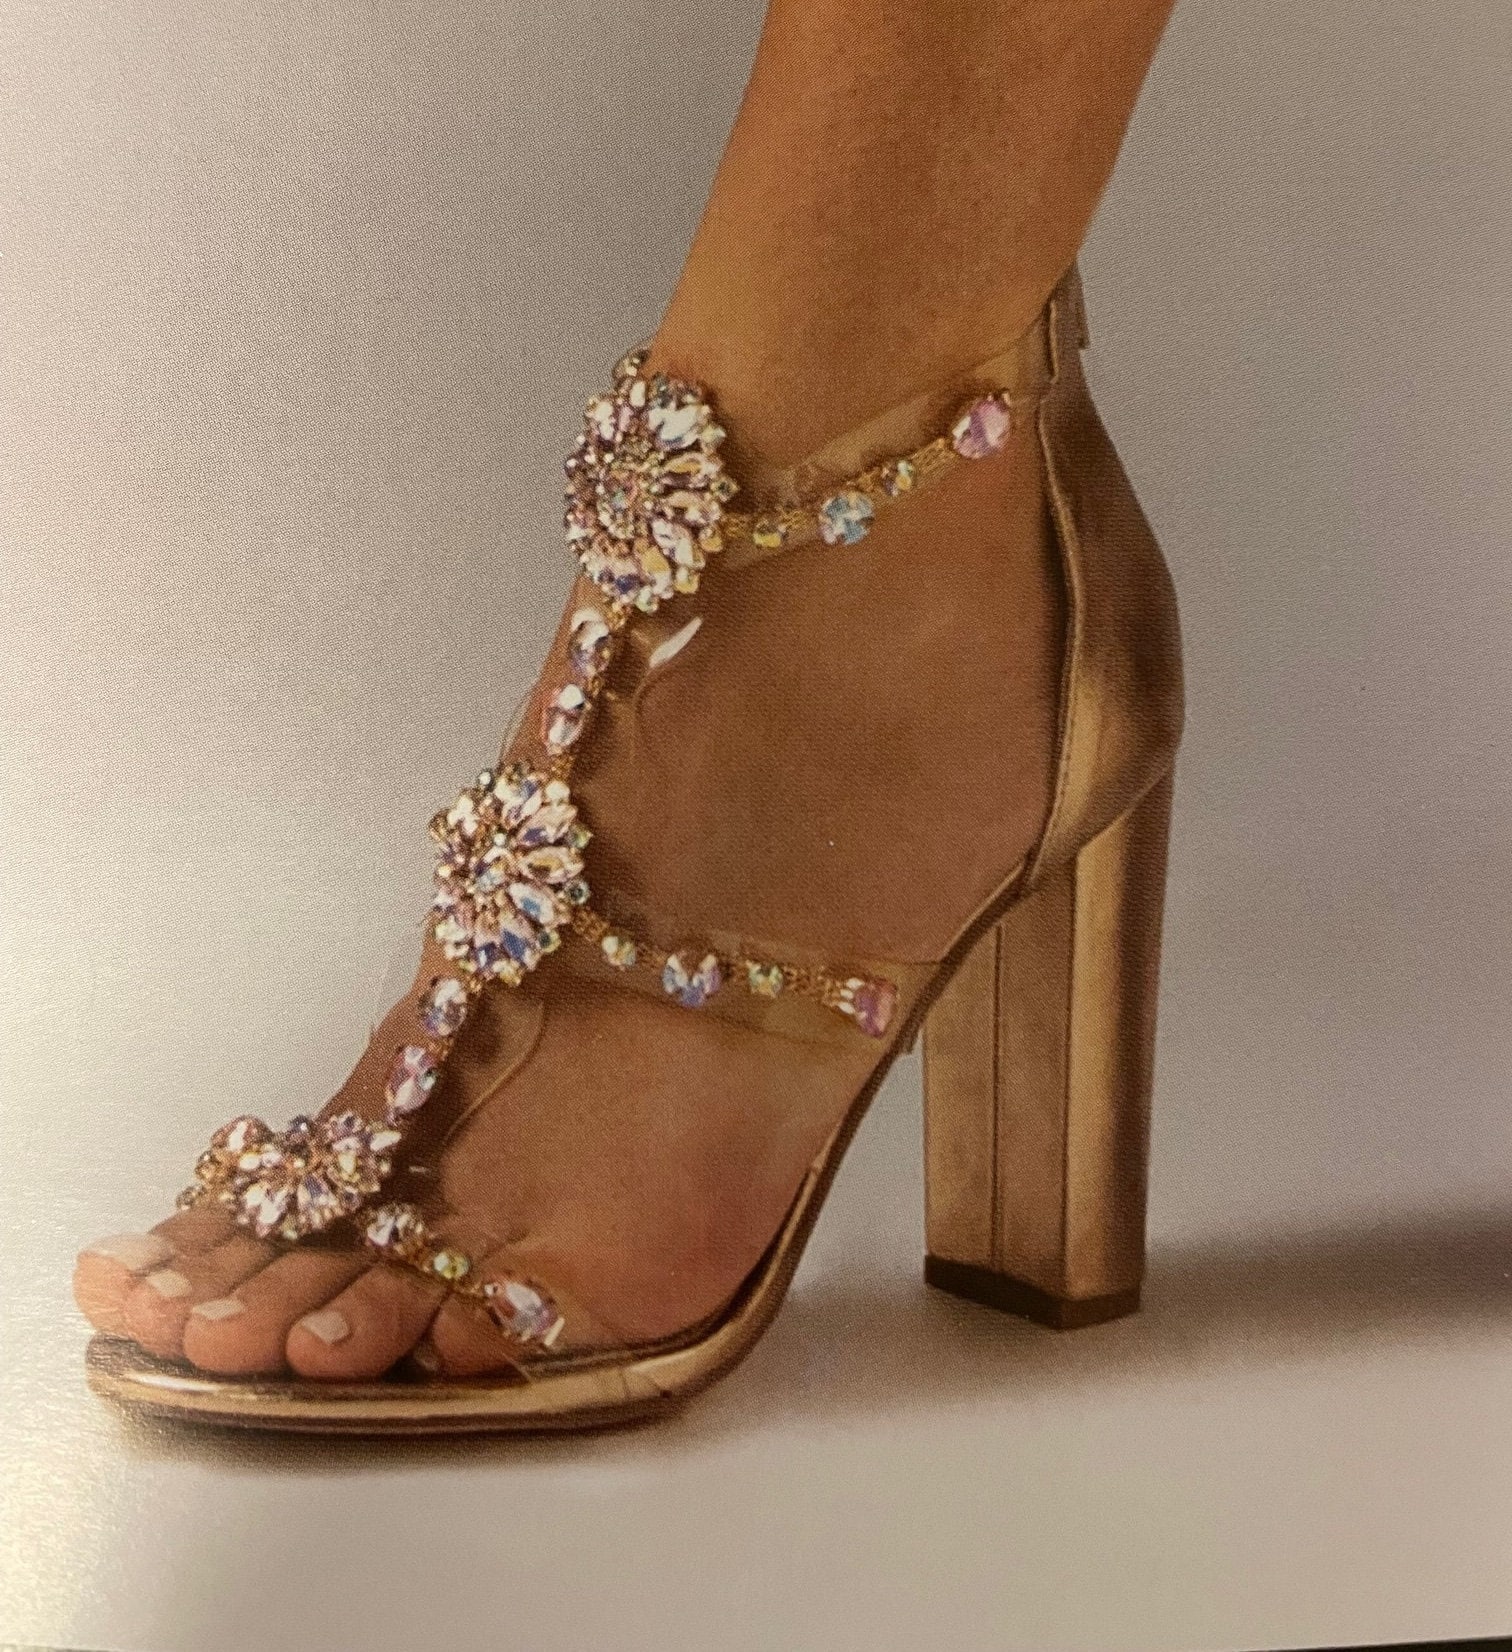  FSJ Women Crystal Studded Clear Pumps Sparkle Rhinestones Mid  Low Heel Sandals Slingback Half D'Orsay Pointed Toe Wedding Shoes Size 4  Beige